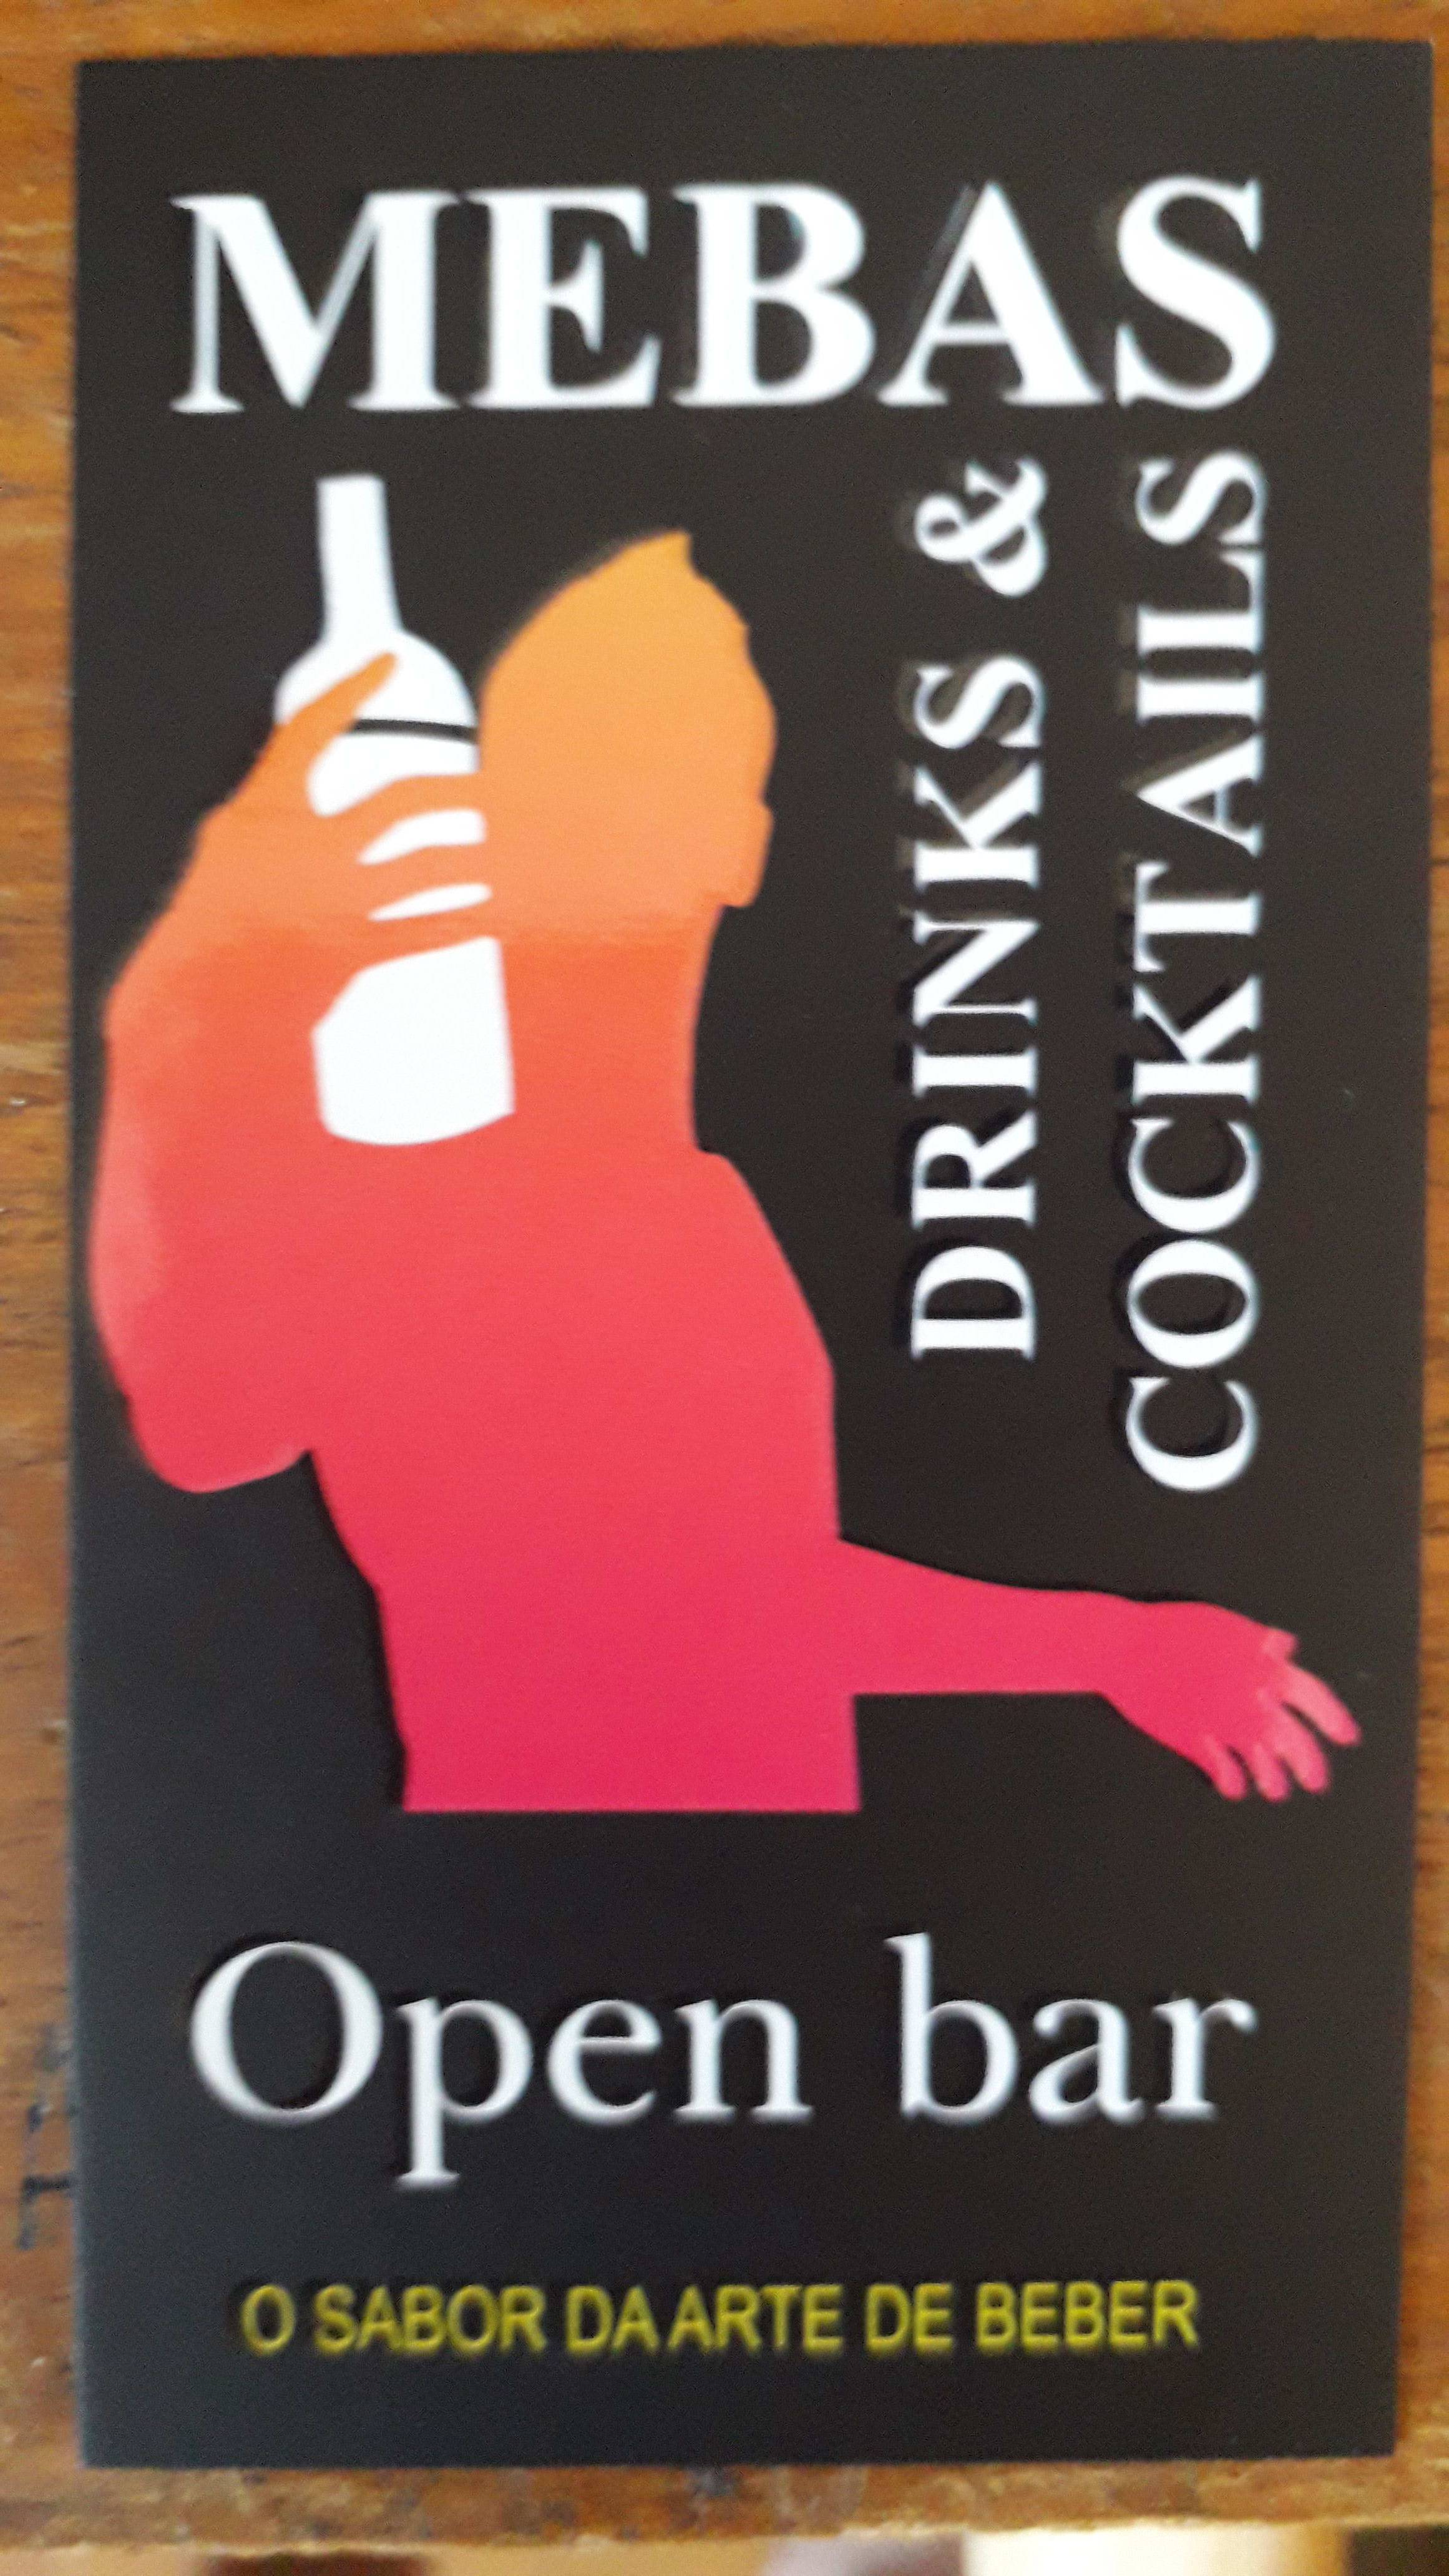 Mebas Drinks & Cocktails